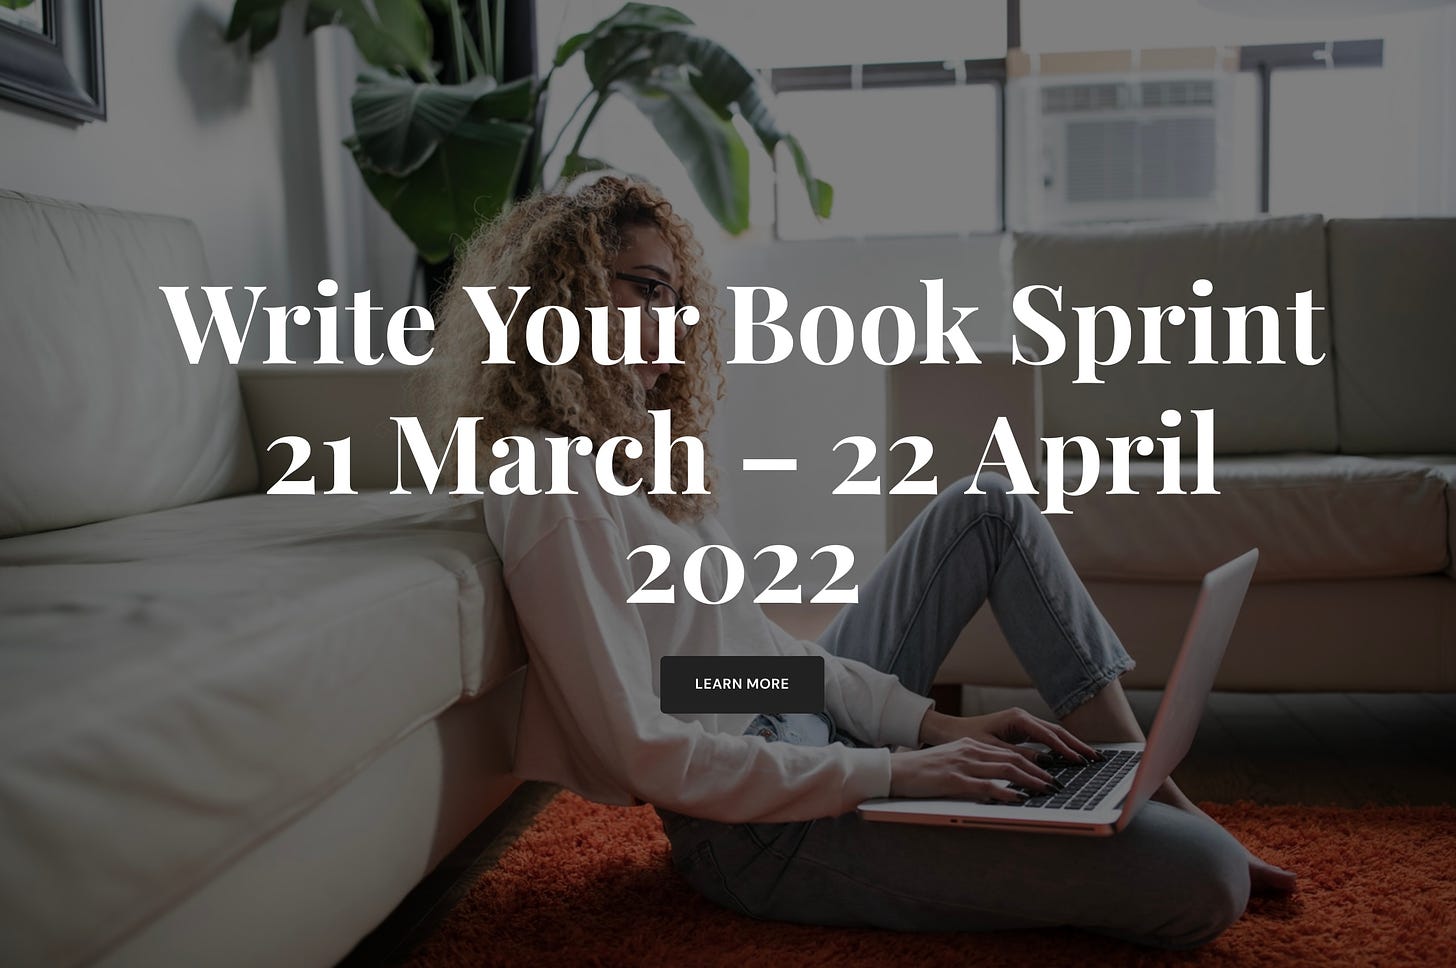 https://neeramahajan.com/write-your-book-sprint/